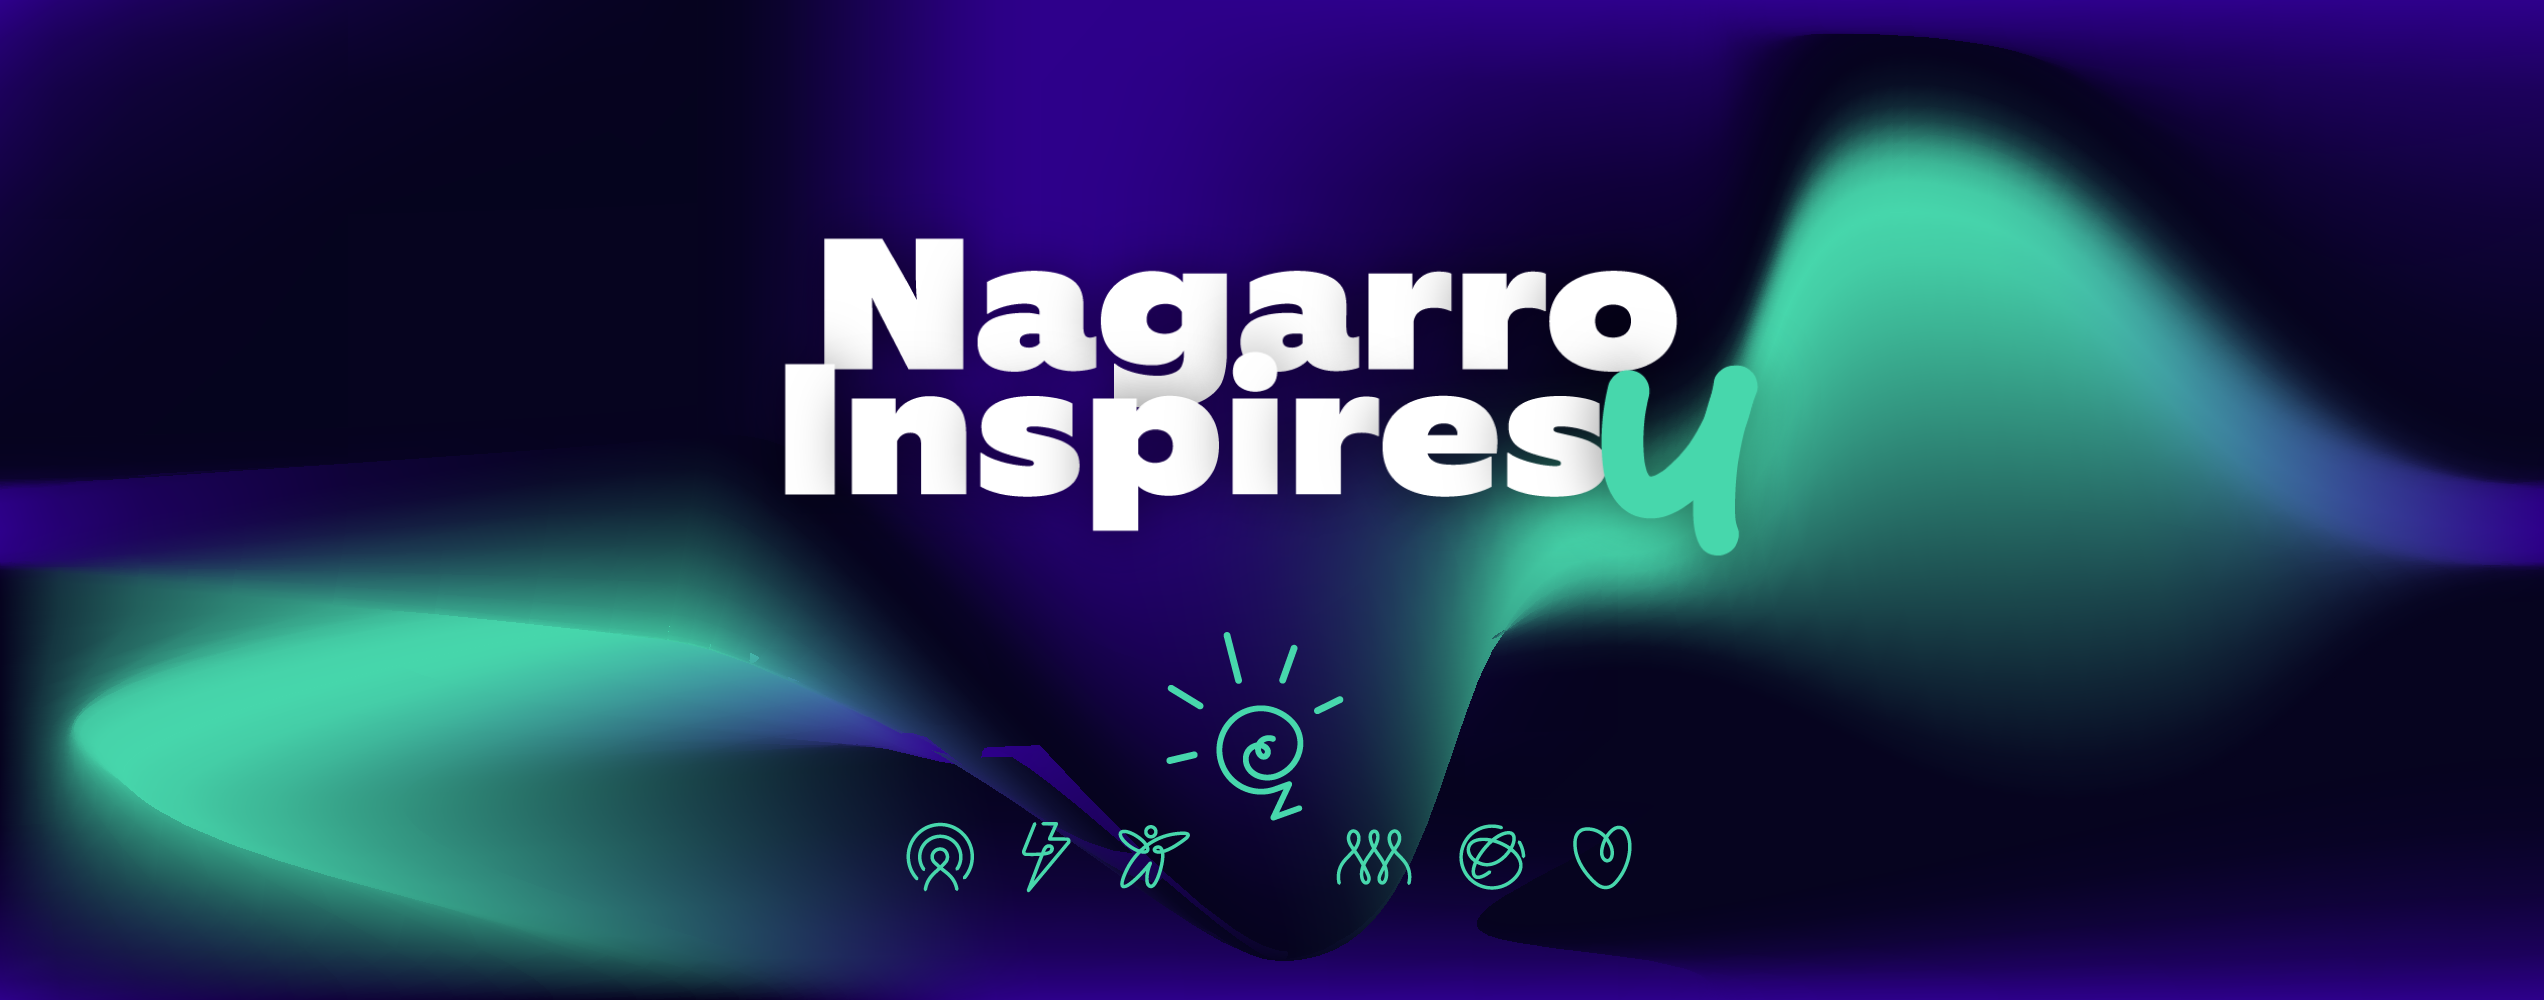 Nagarro-inspires-U-illustrative-banner-for-desktop-with-NagarroInspiresU-text-and-multicolor-image